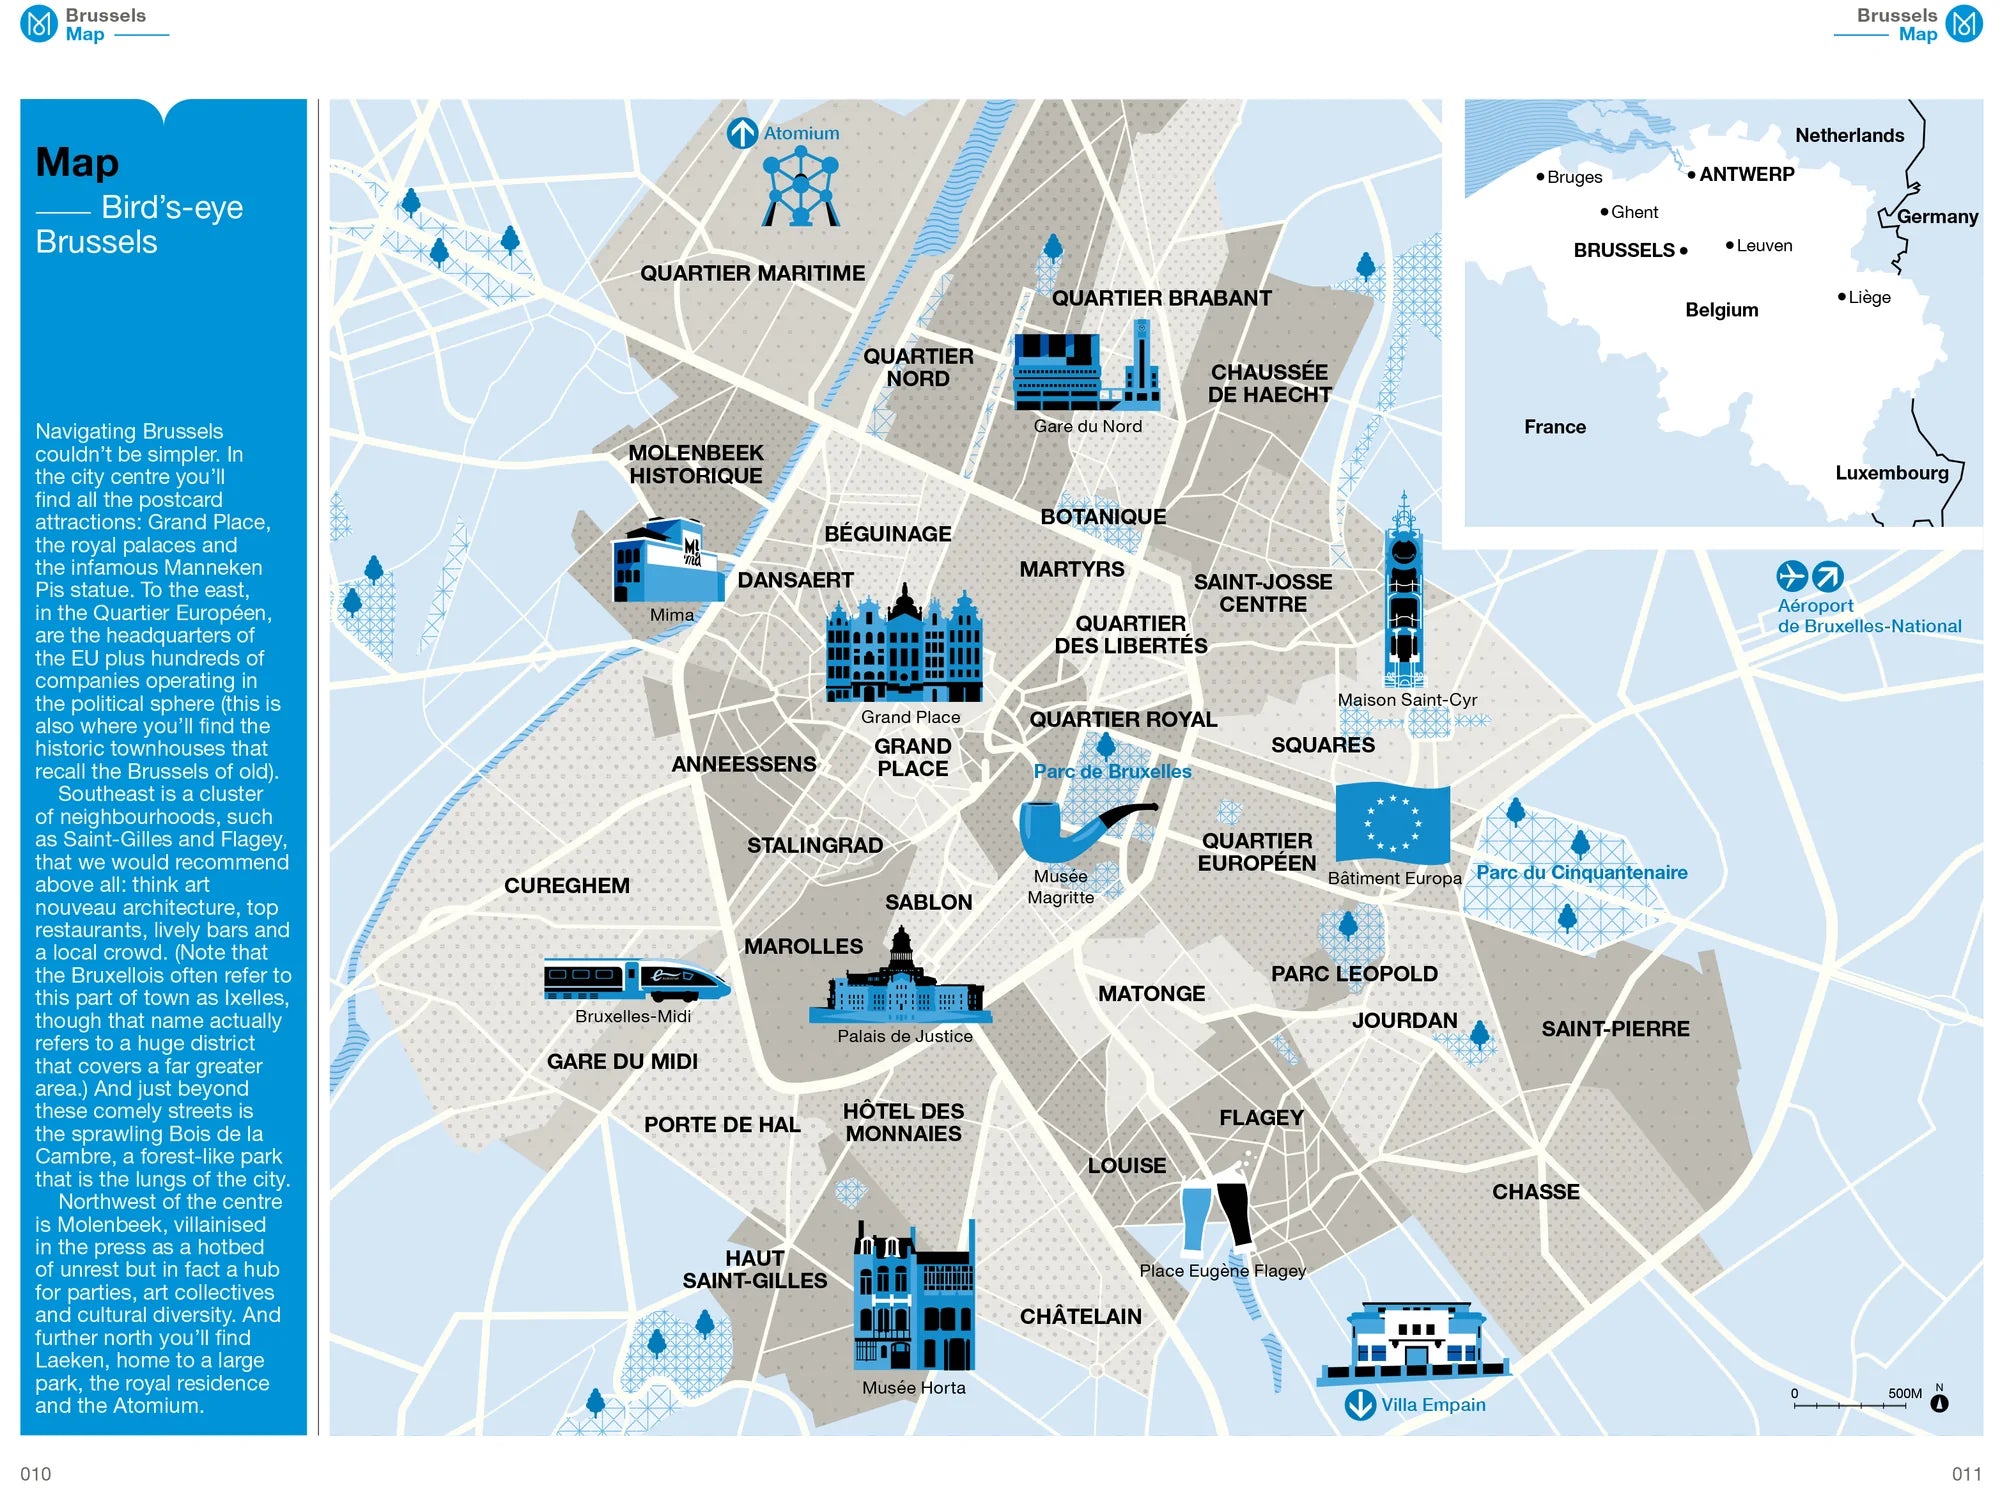 Brussels + Antwerp: The Monocle Travel Guide Series